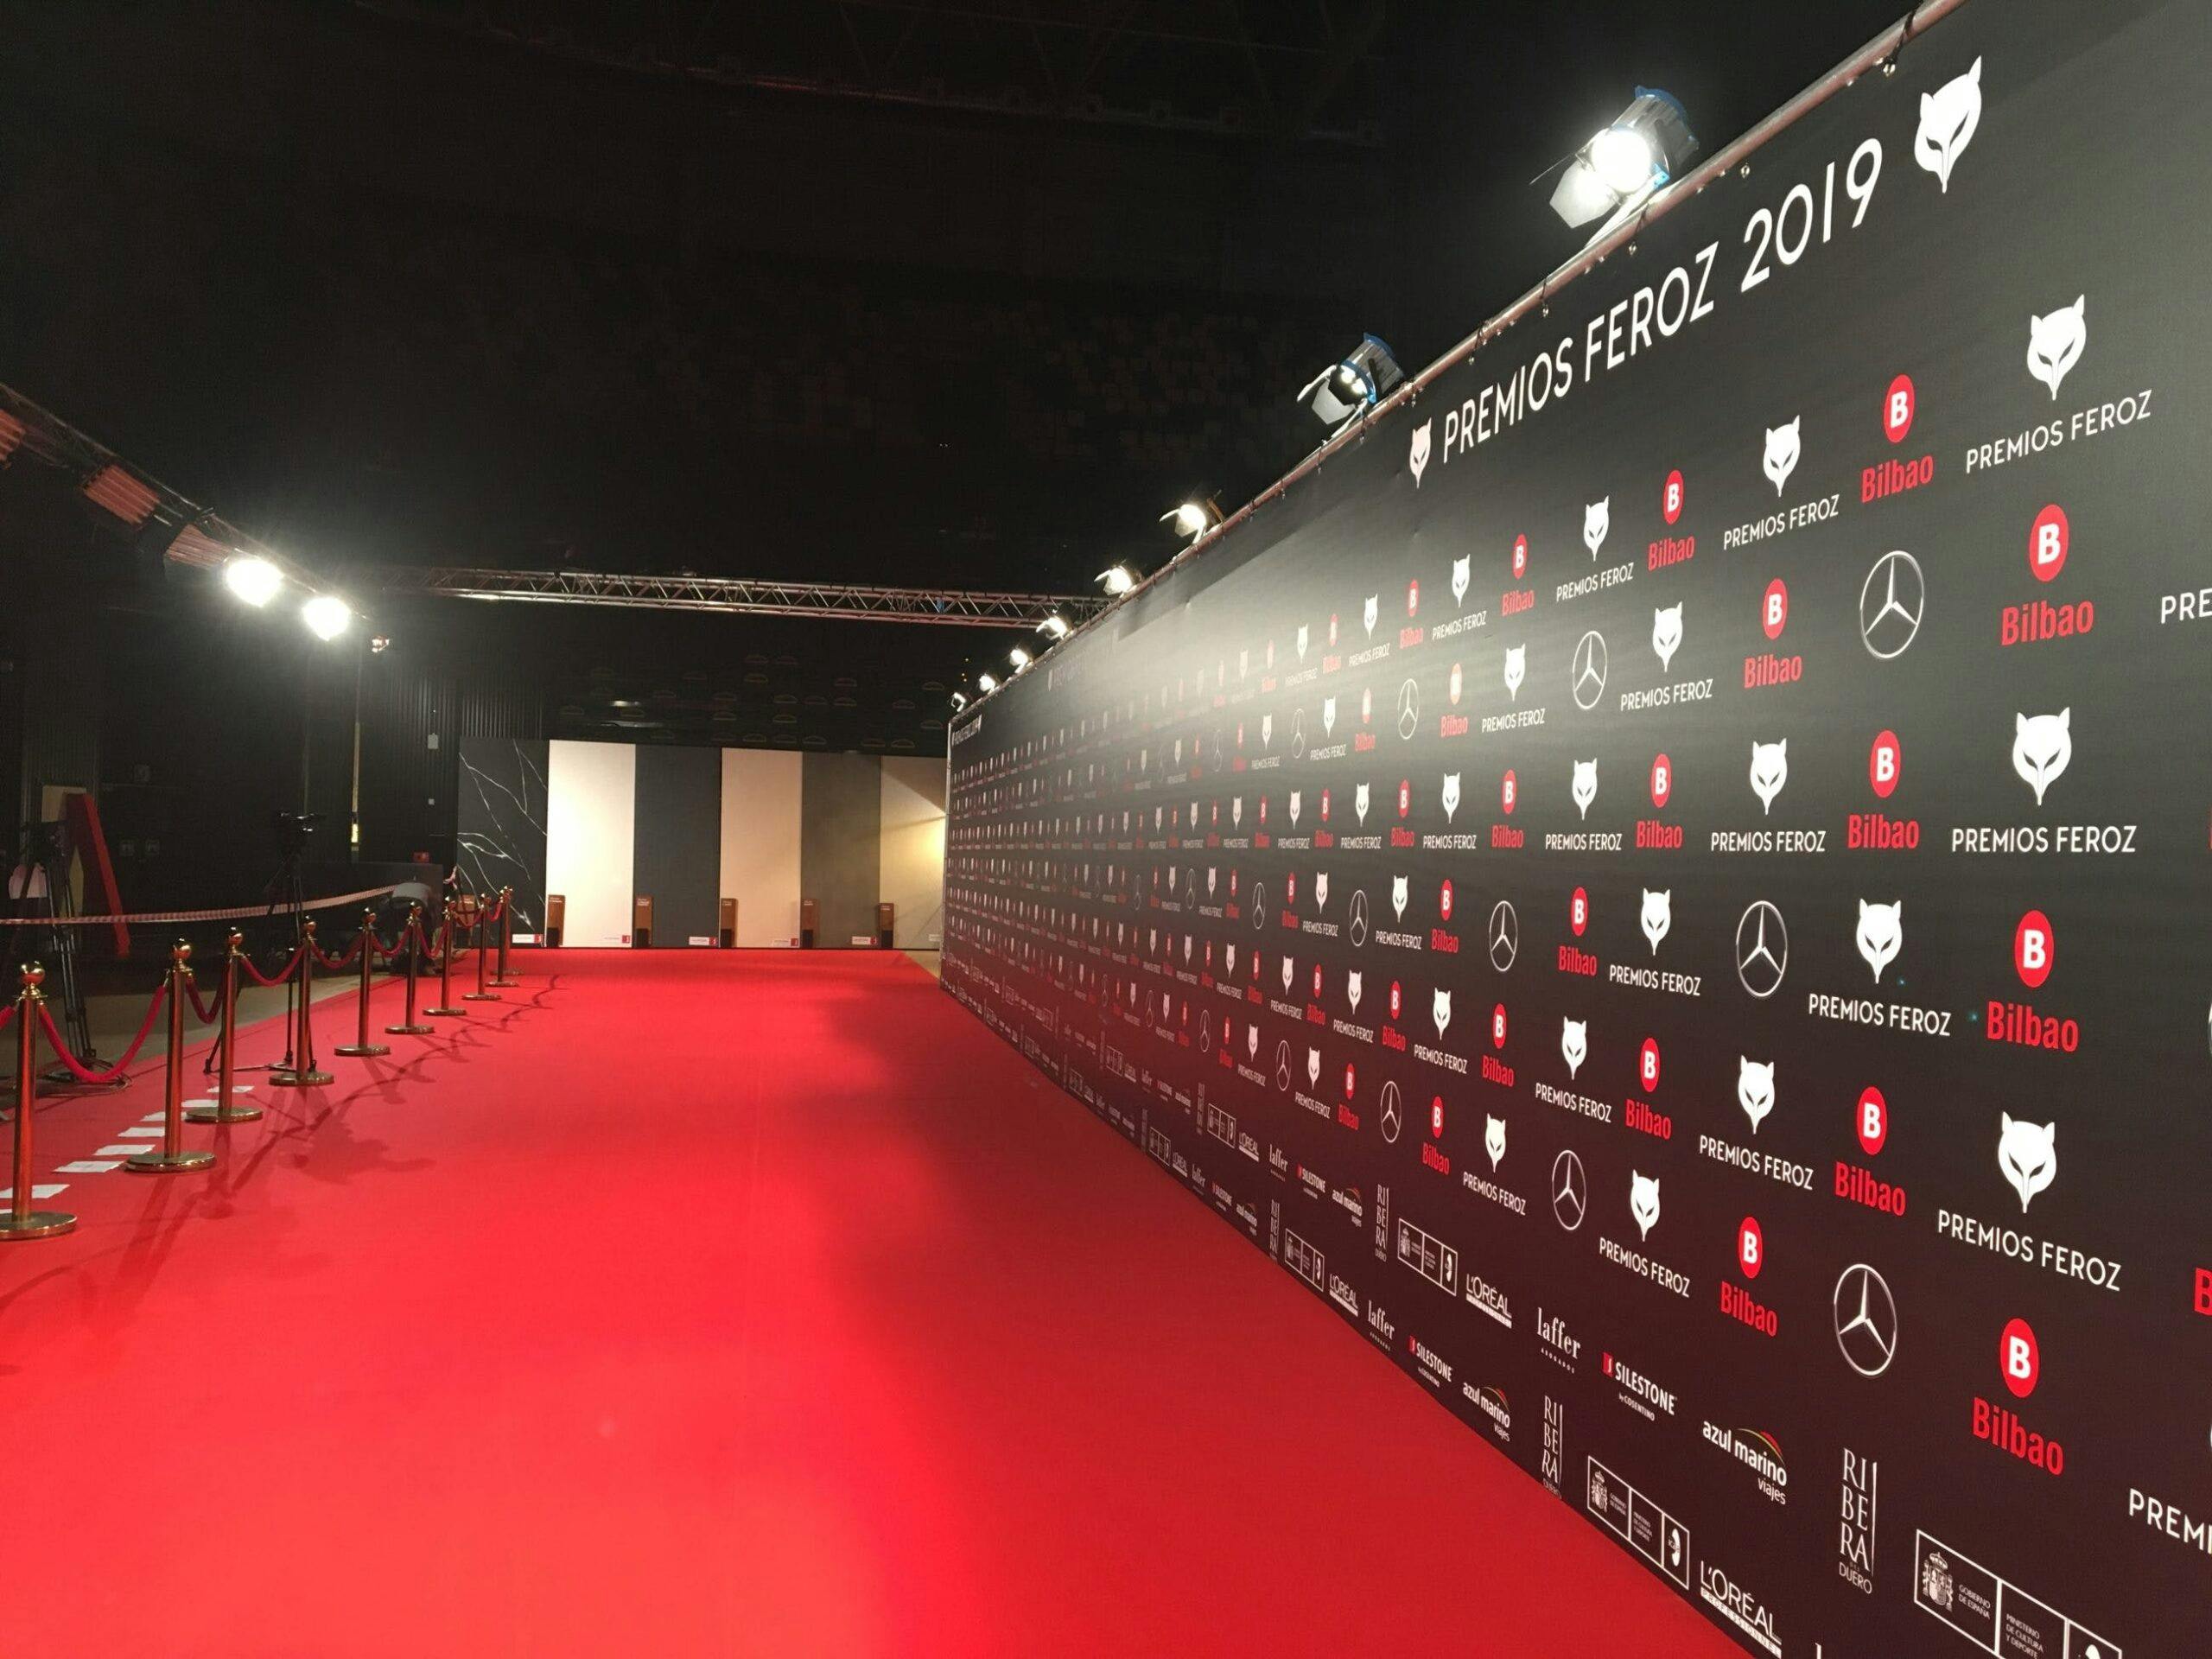 Image 34 of Alfombra roja Premios Feroz 2019 Tablas Silestone 1 scaled in Silestone® and 2019 Feroz Awards - Cosentino